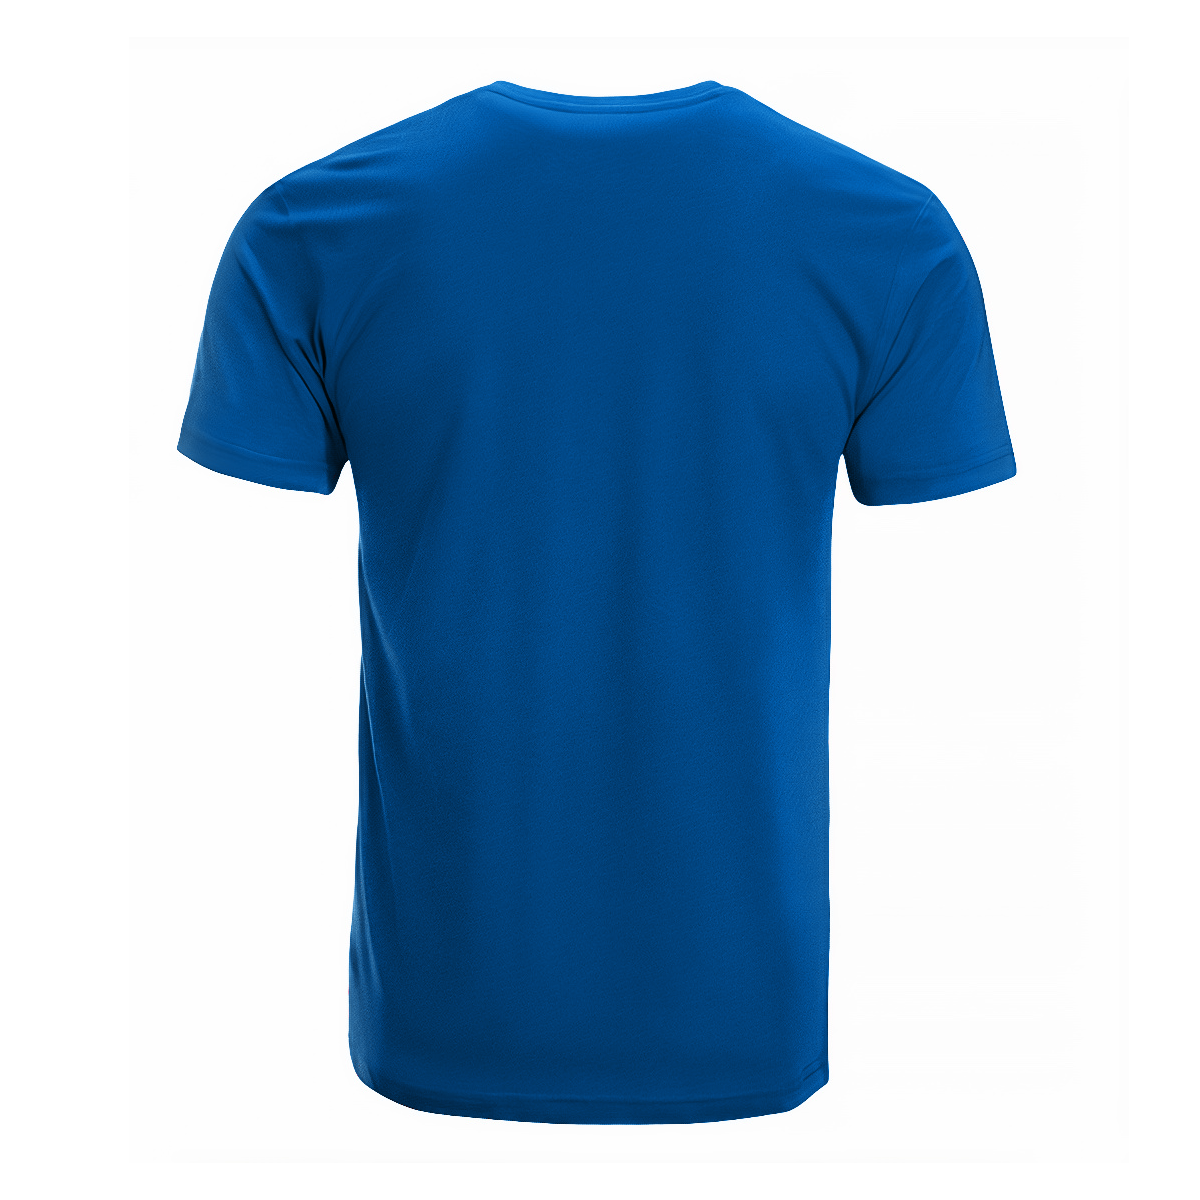 Henderson Tartan Crest T-shirt - I'm not yelling style